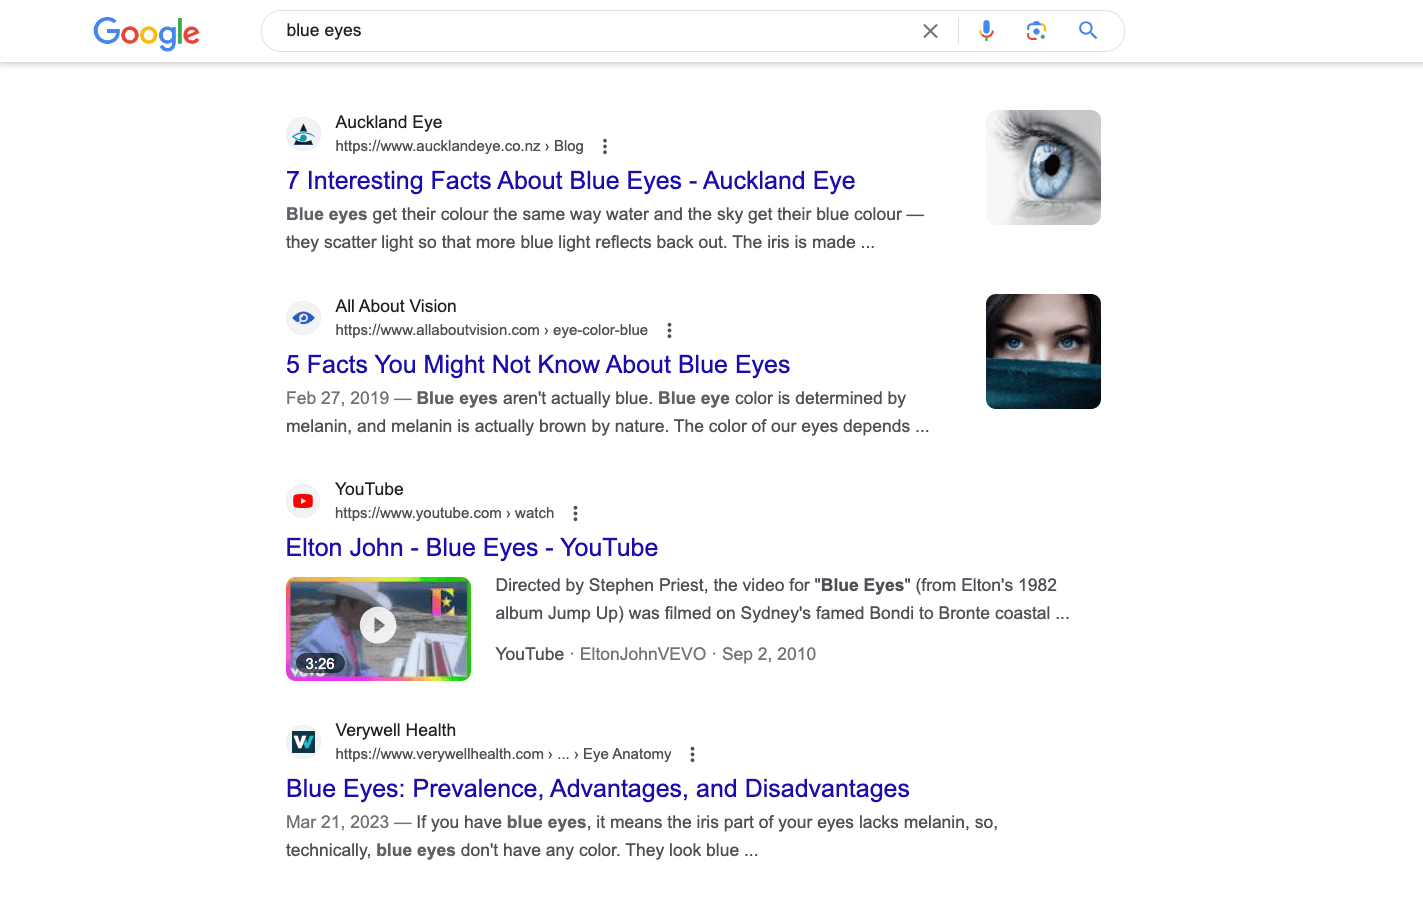 Google SERP of Blue Eyes Query